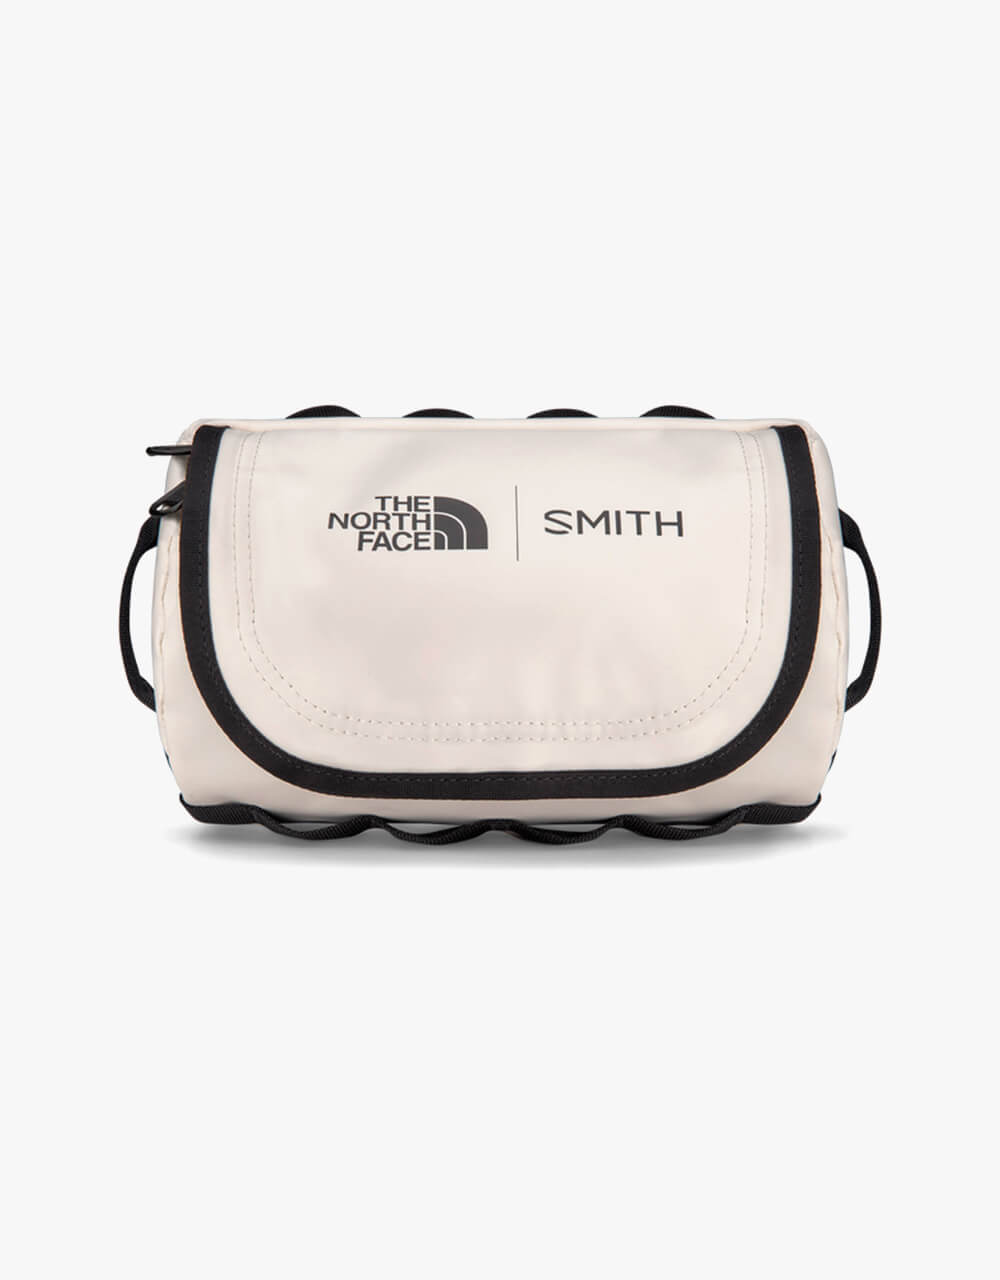 Smith x The North Face Proxy Snowboard Goggles - Austin Smith/ChromaPop™ Sun Black Gold Mirror